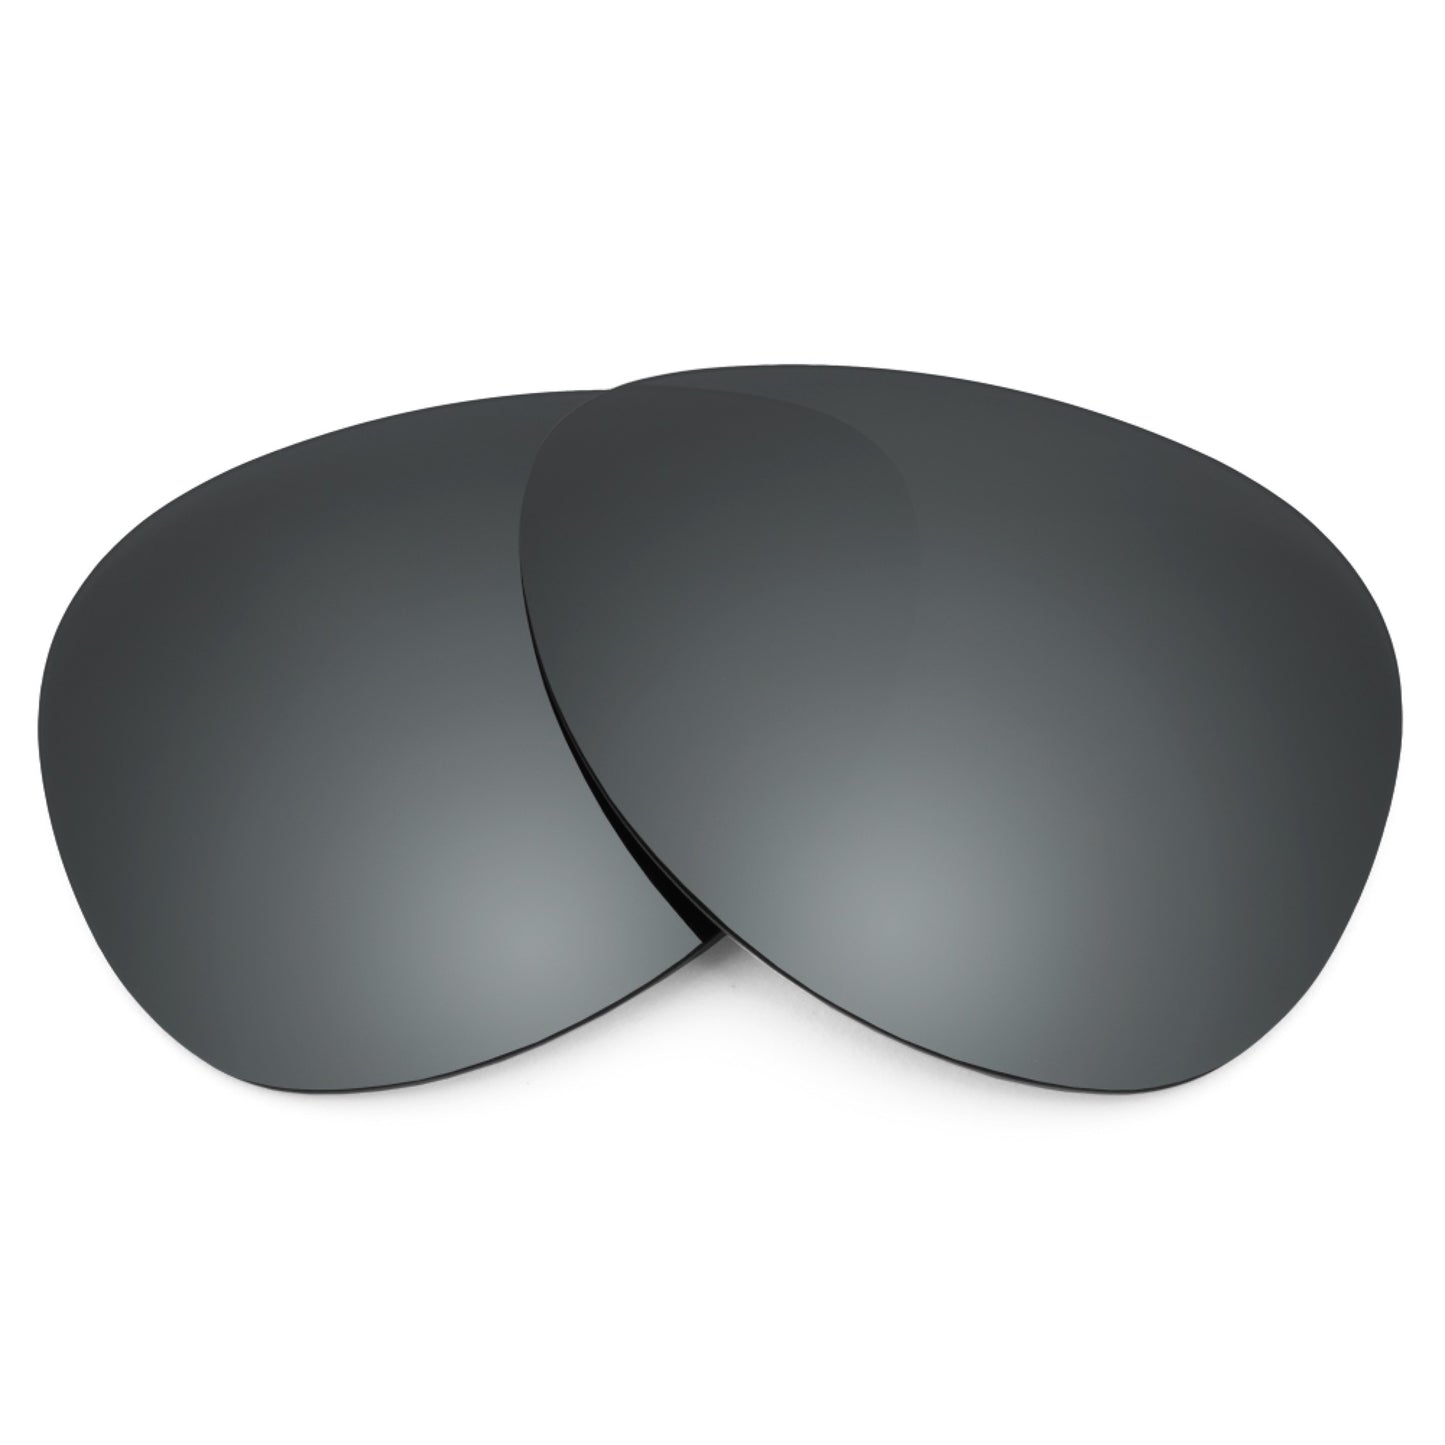 Revant replacement lenses for Ray-Ban Aviator Junior Remix RJ9506S 50mm Non-Polarized Black Chrome